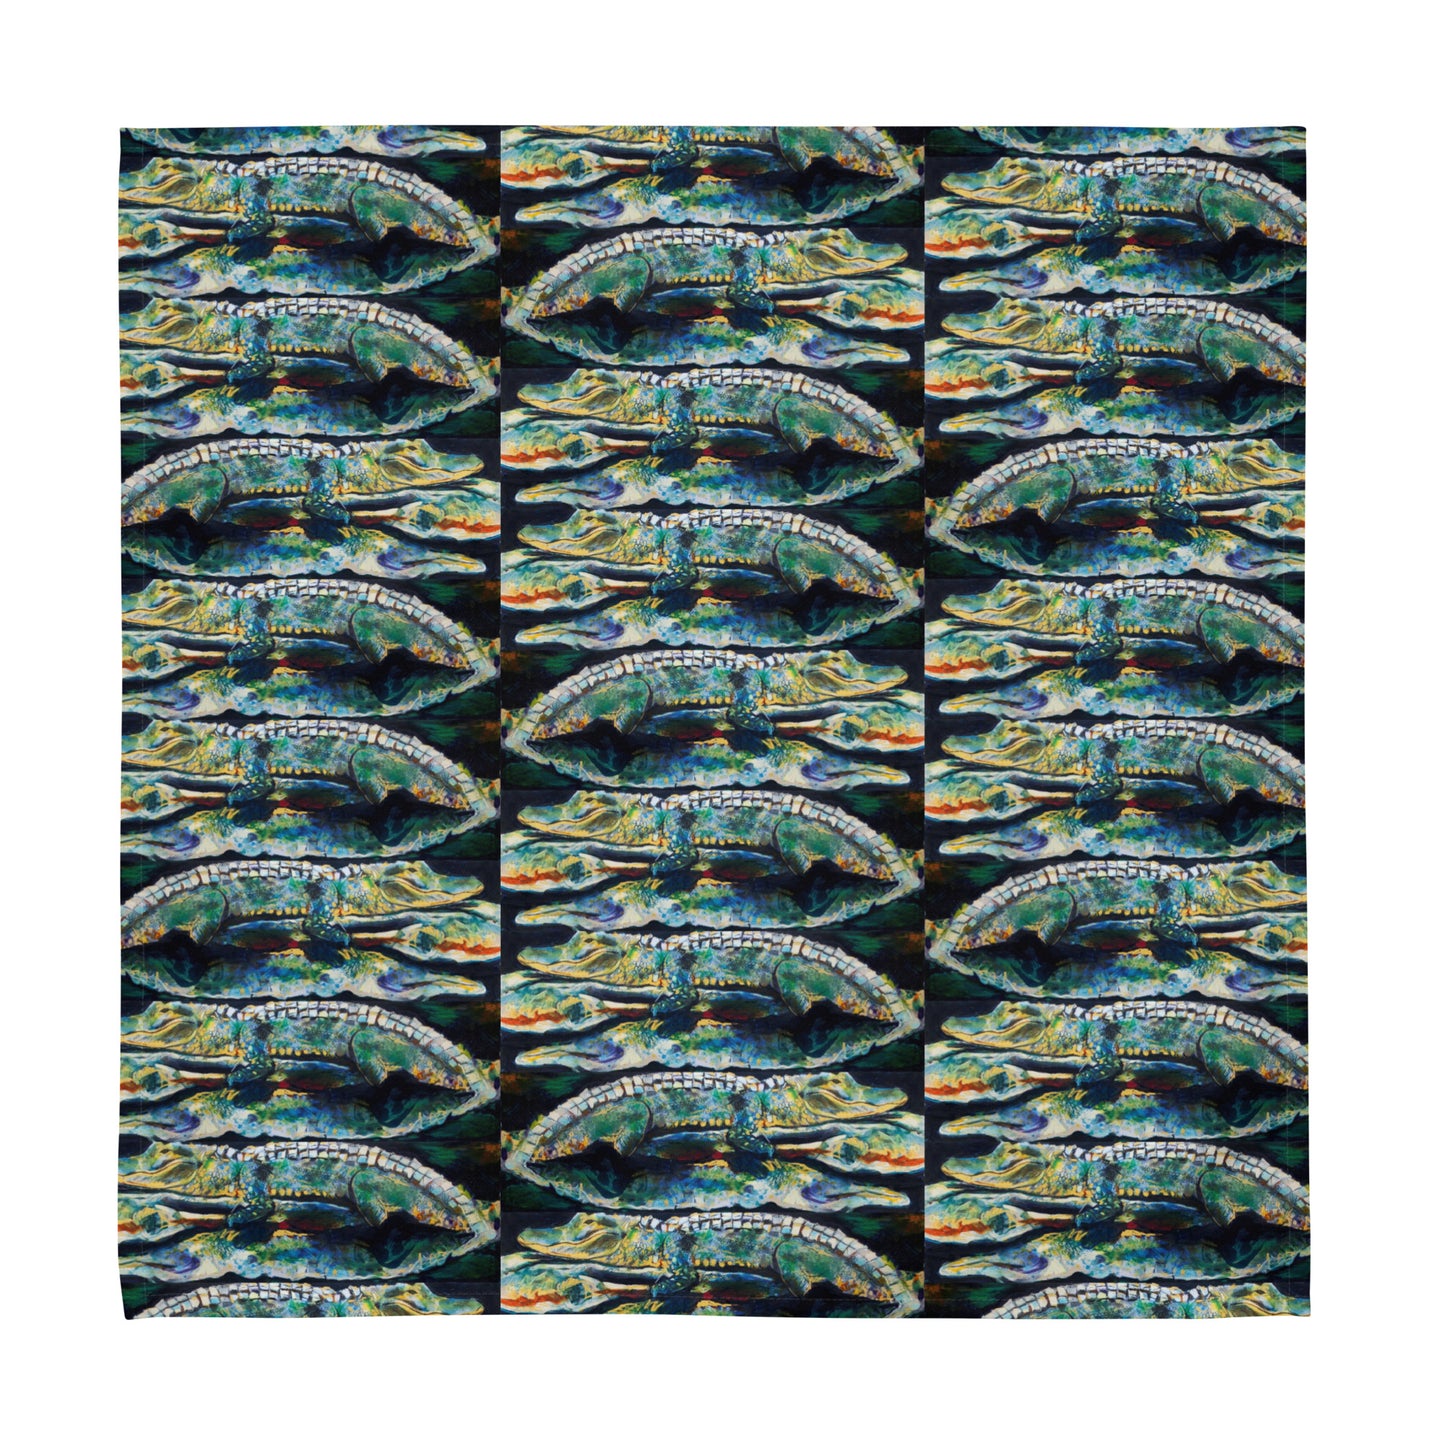 Louisiana Alligators Cloth napkin set